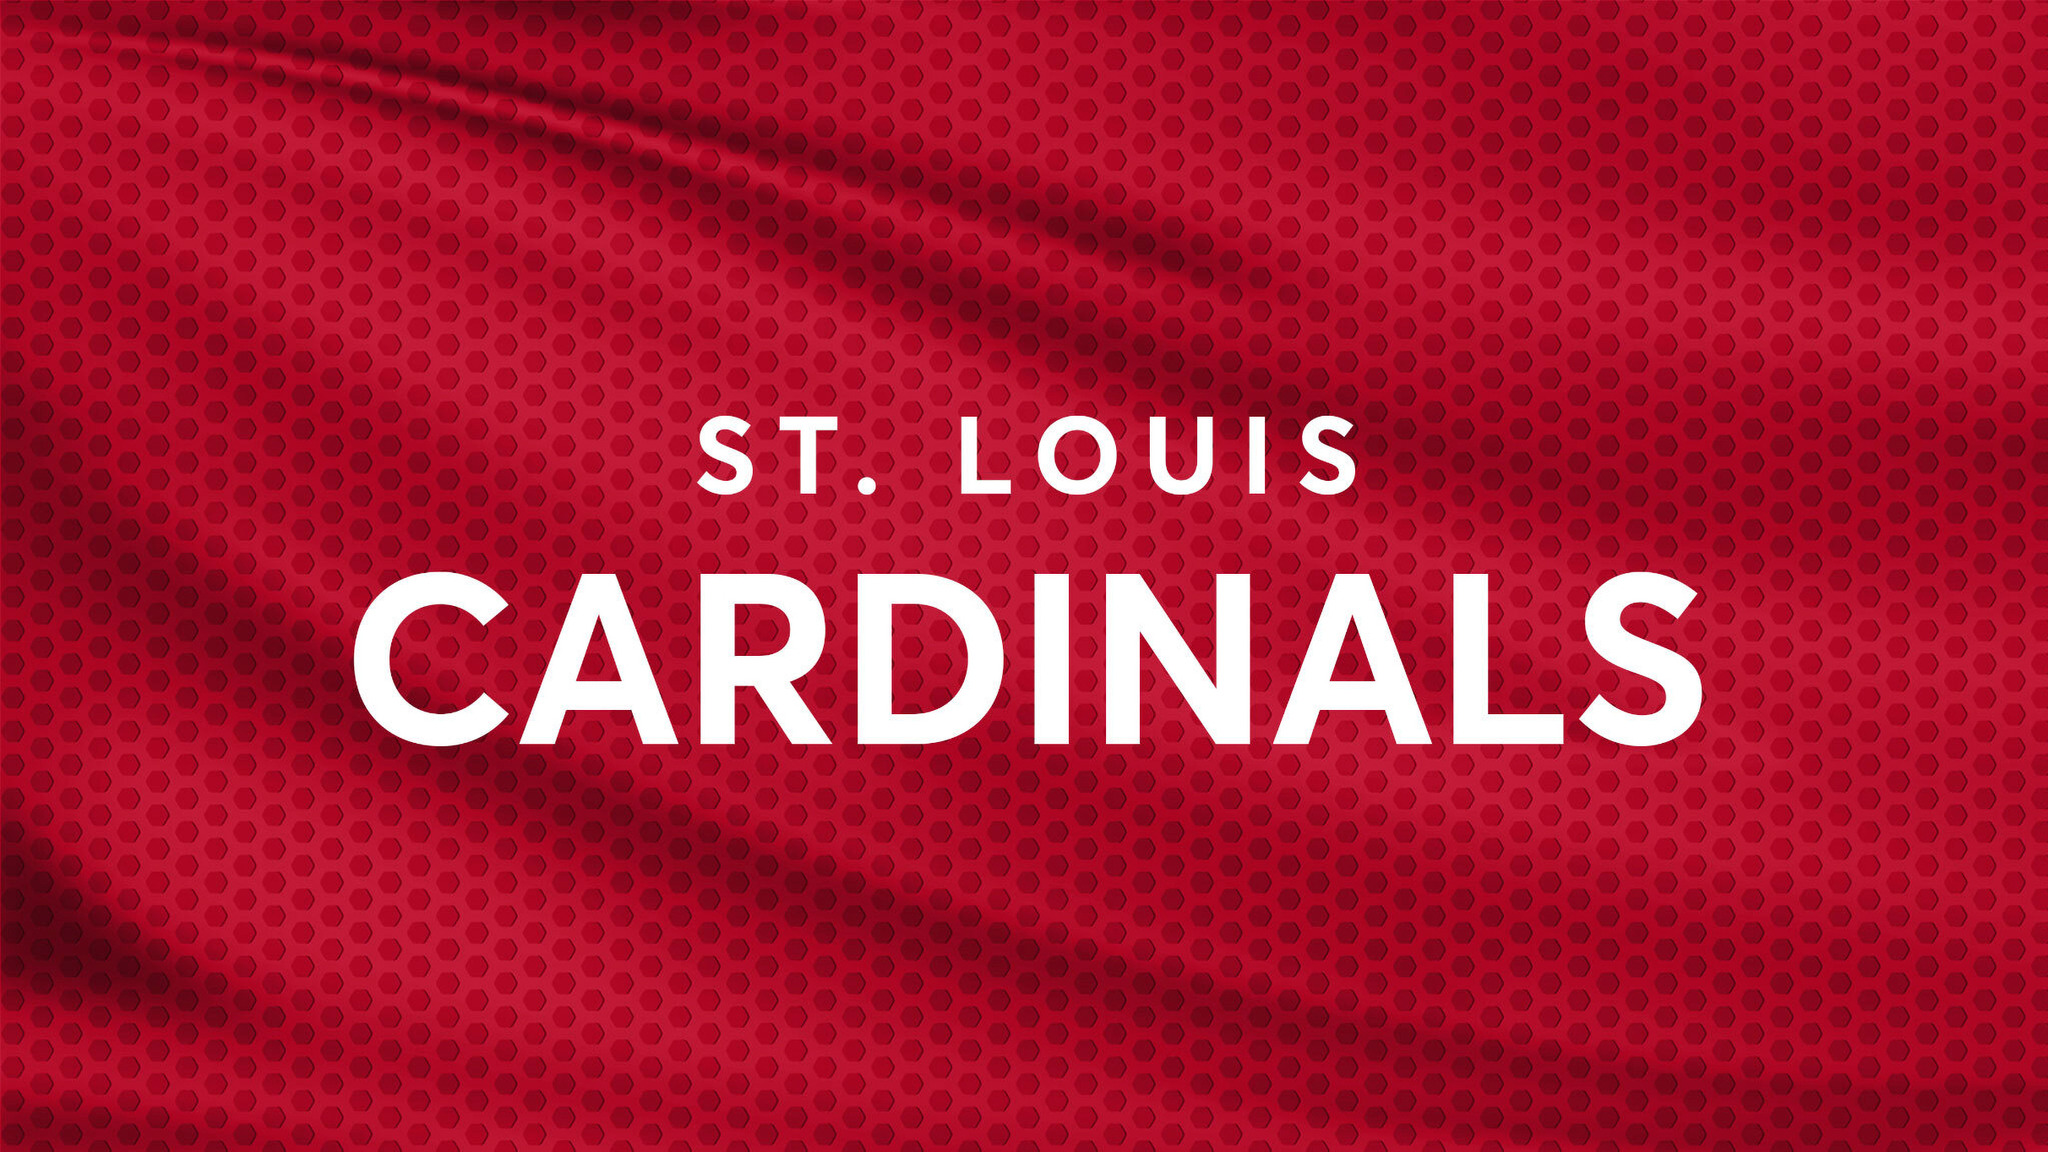 St. Louis Cardinals Caravan Tickets Single Game Tickets & Schedule